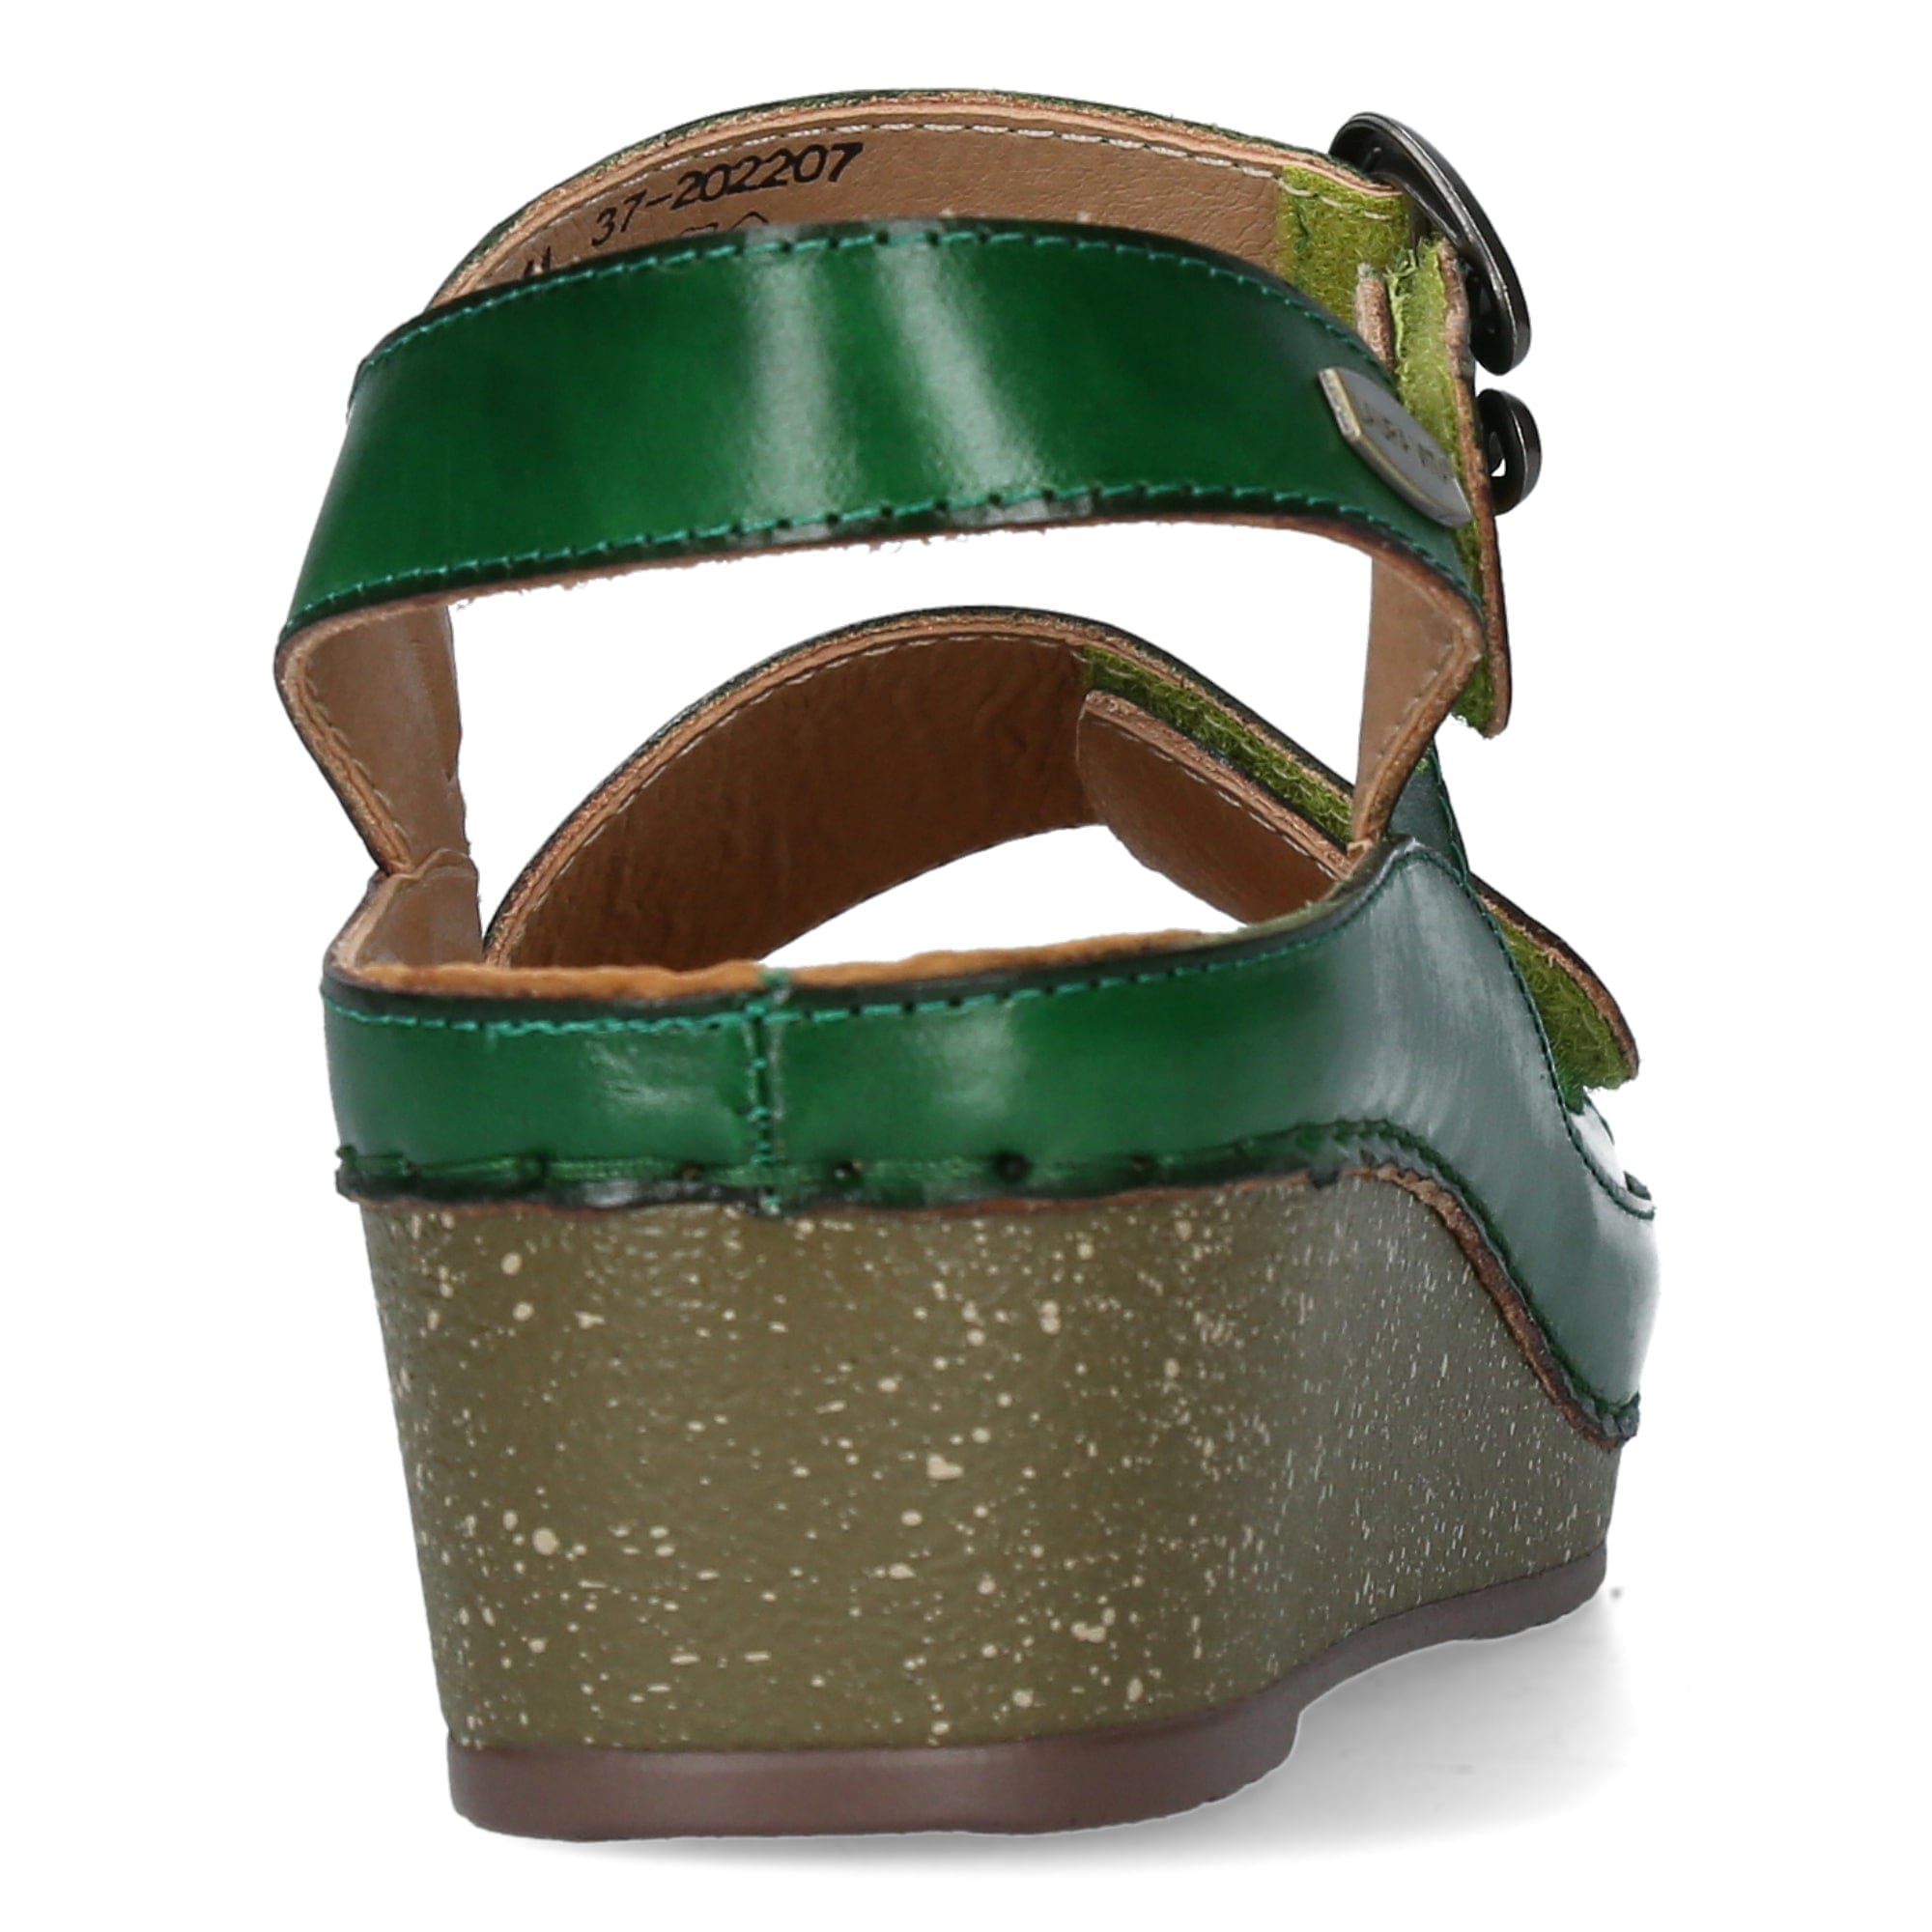 Chaussure FACSCINEO 0122 - Sandale